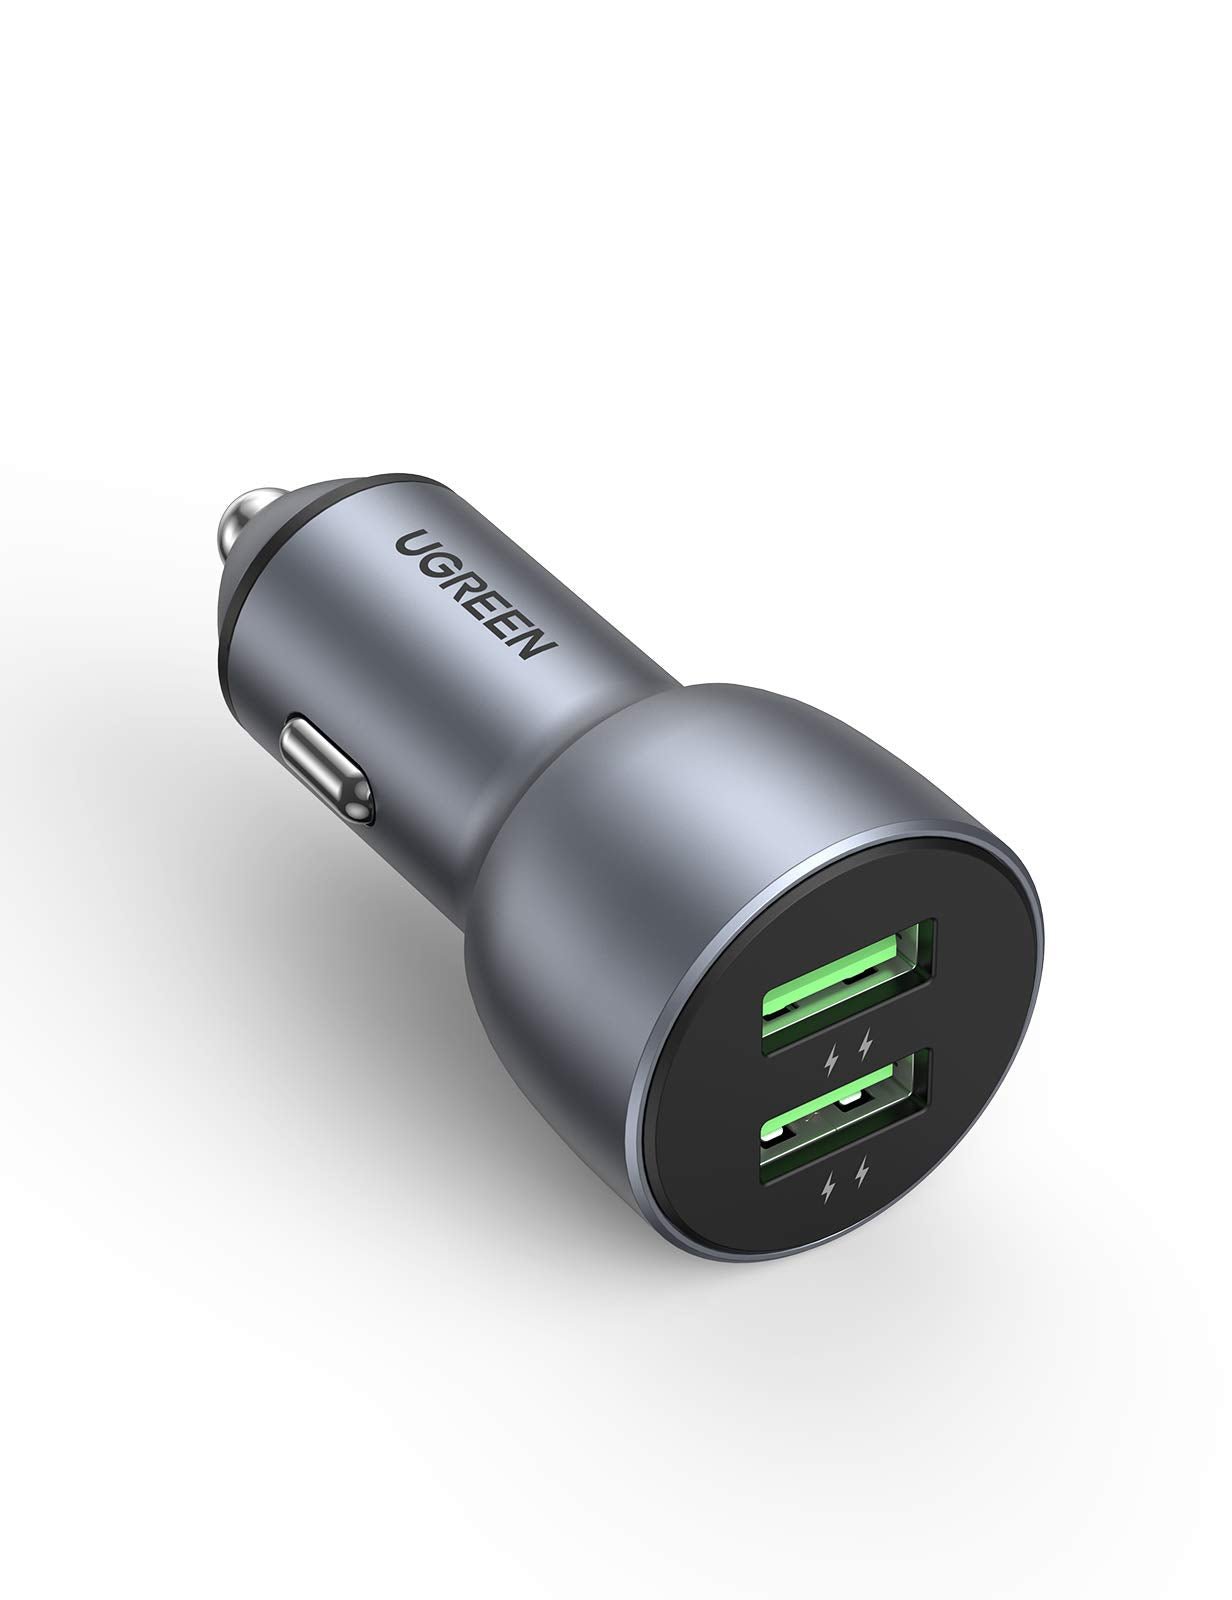 Auto USB Schnell Ladegerät 4 Anschlüsse Quick Charge 3.0 Kfz Adapter Z